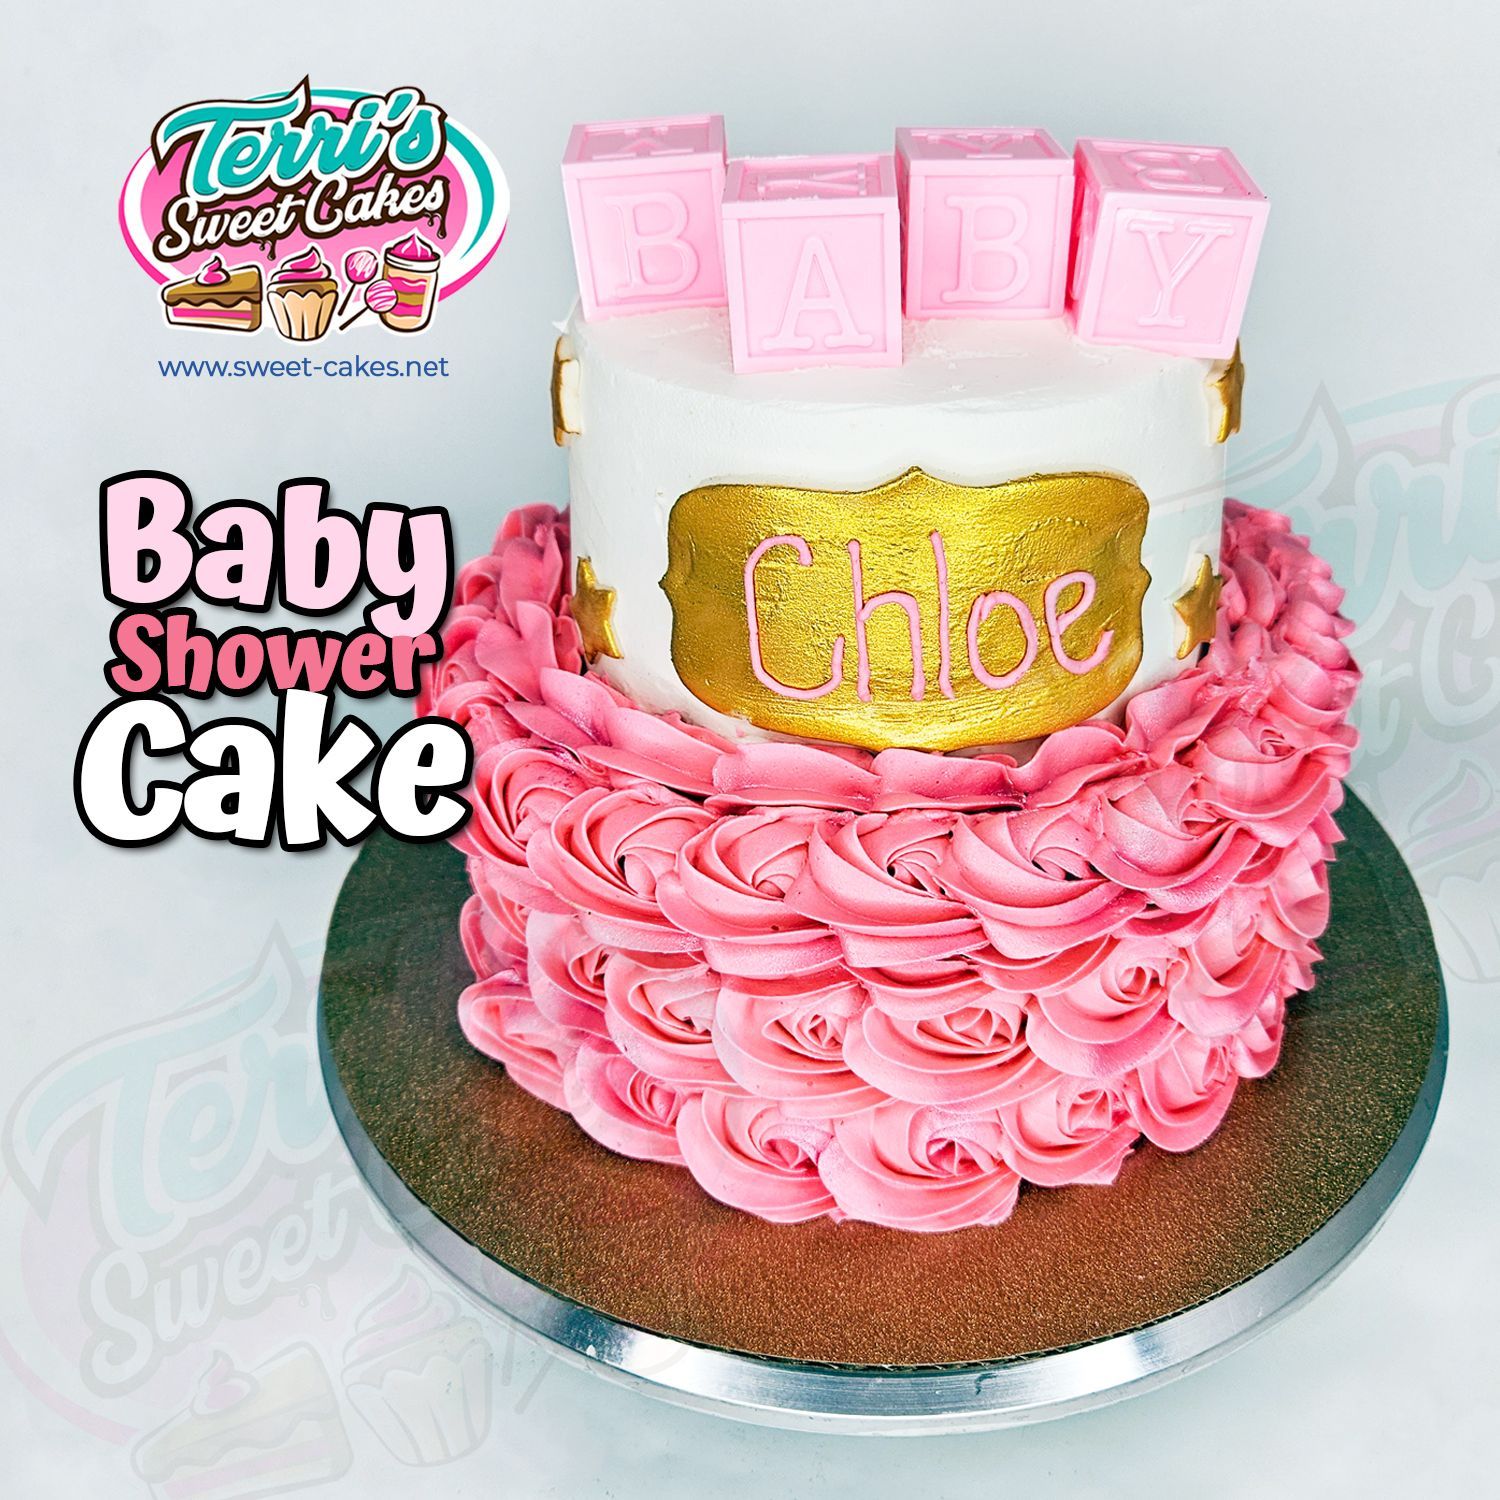 Baby Shower Cake by Terri's Sweet Cakes